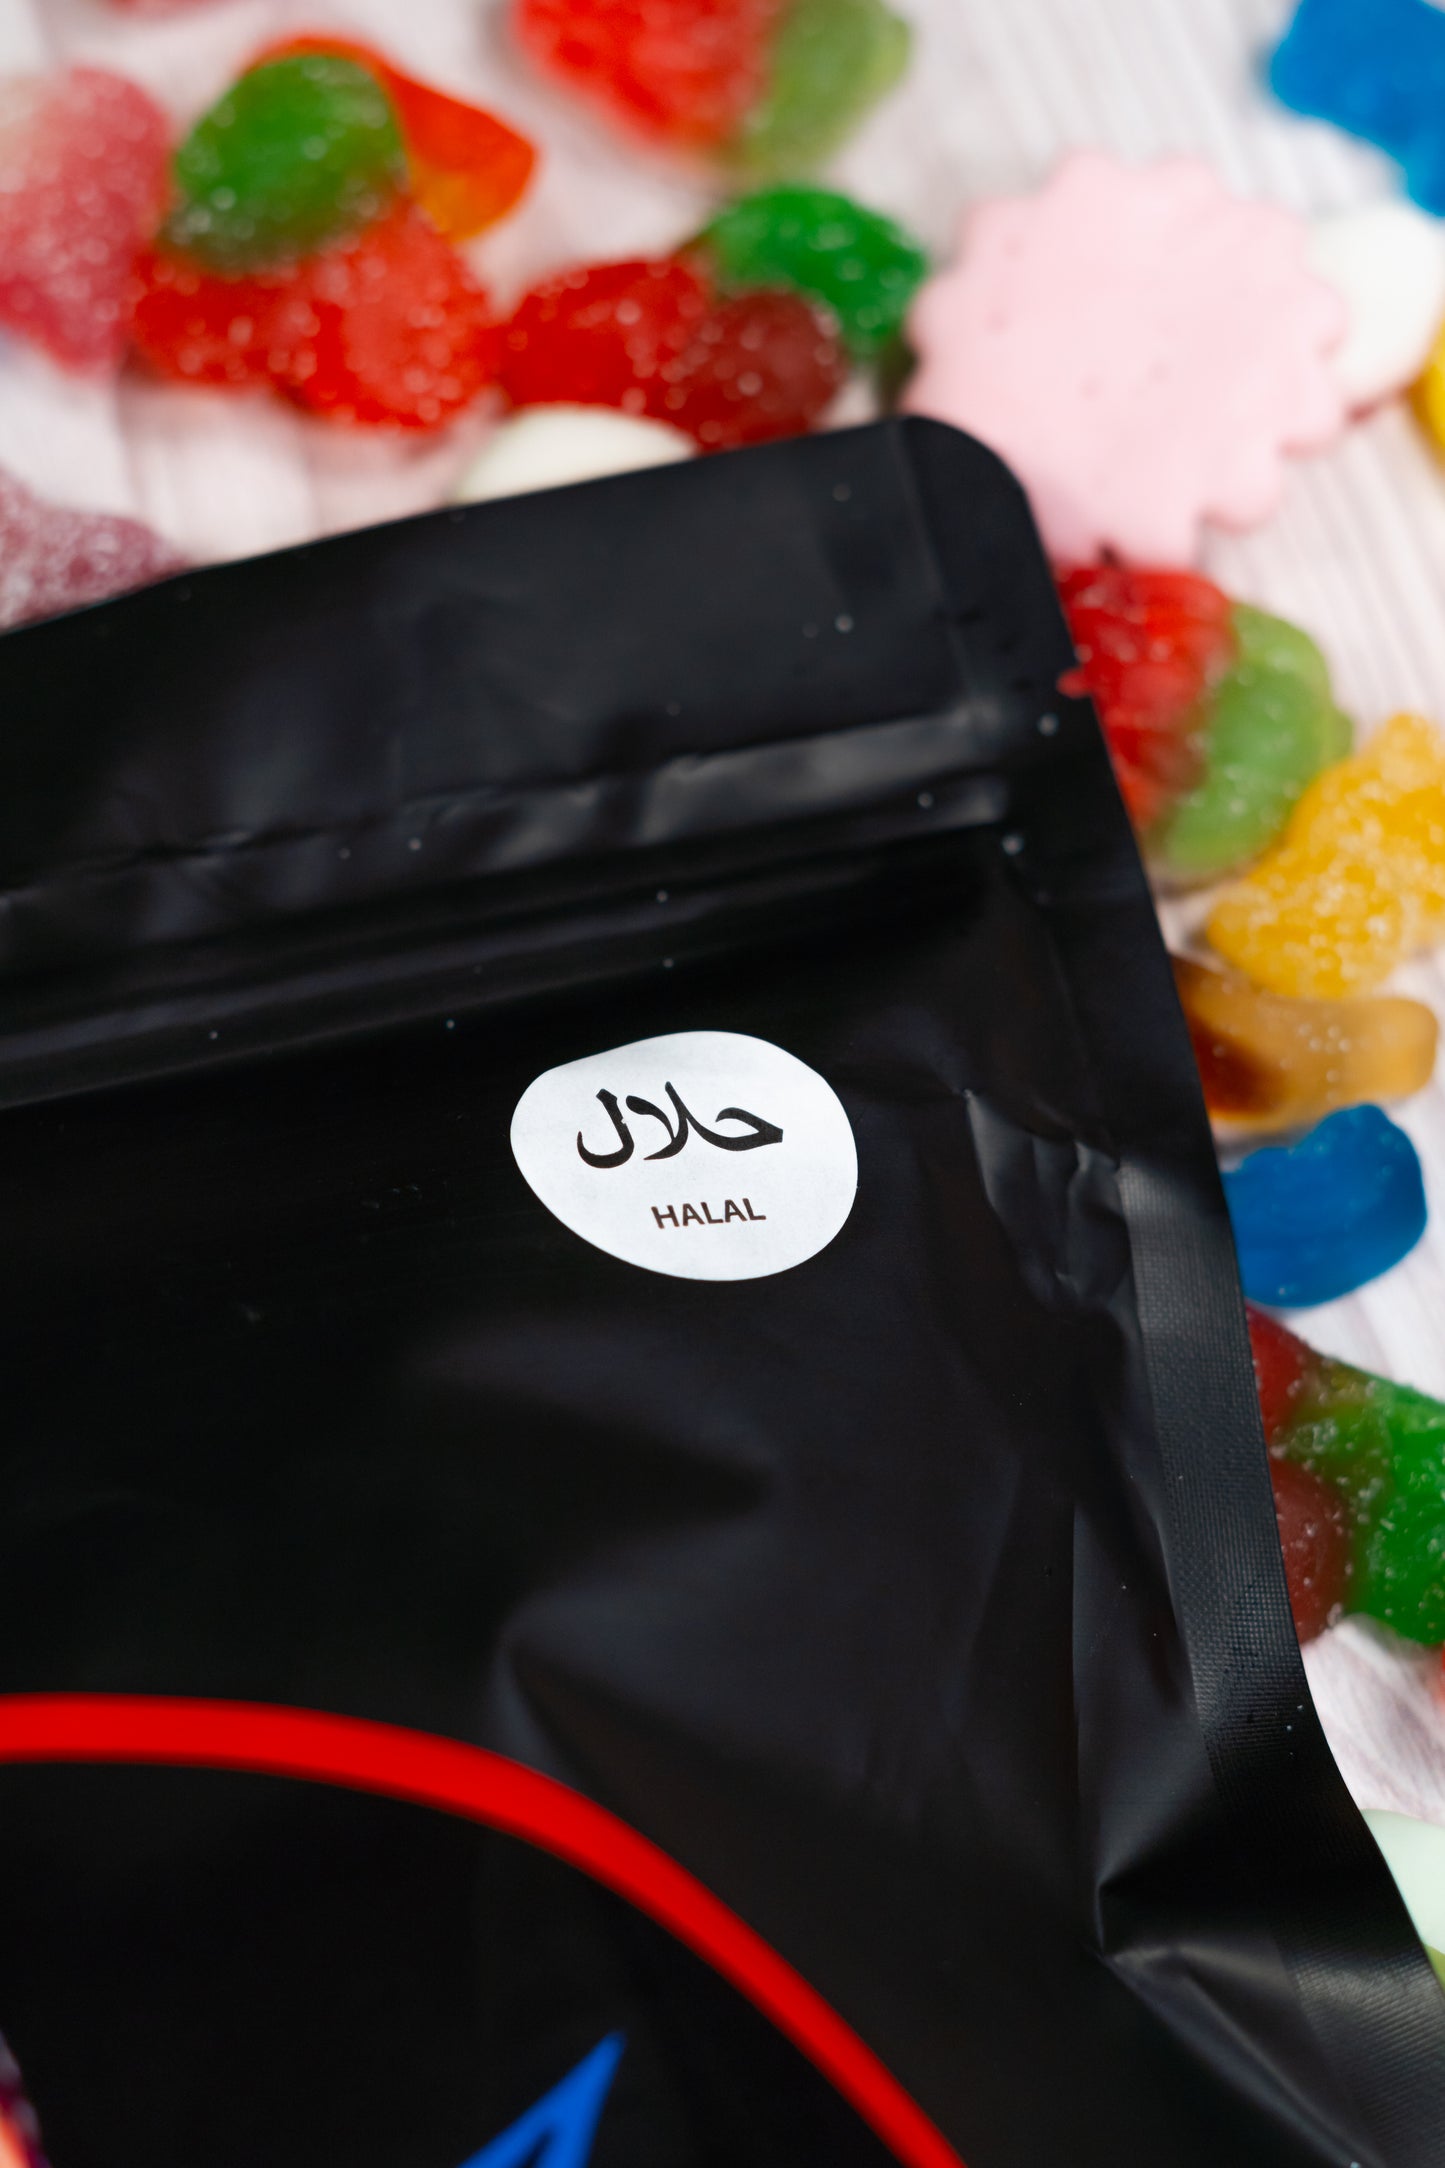 WFD sweets 1kg (halal mix)